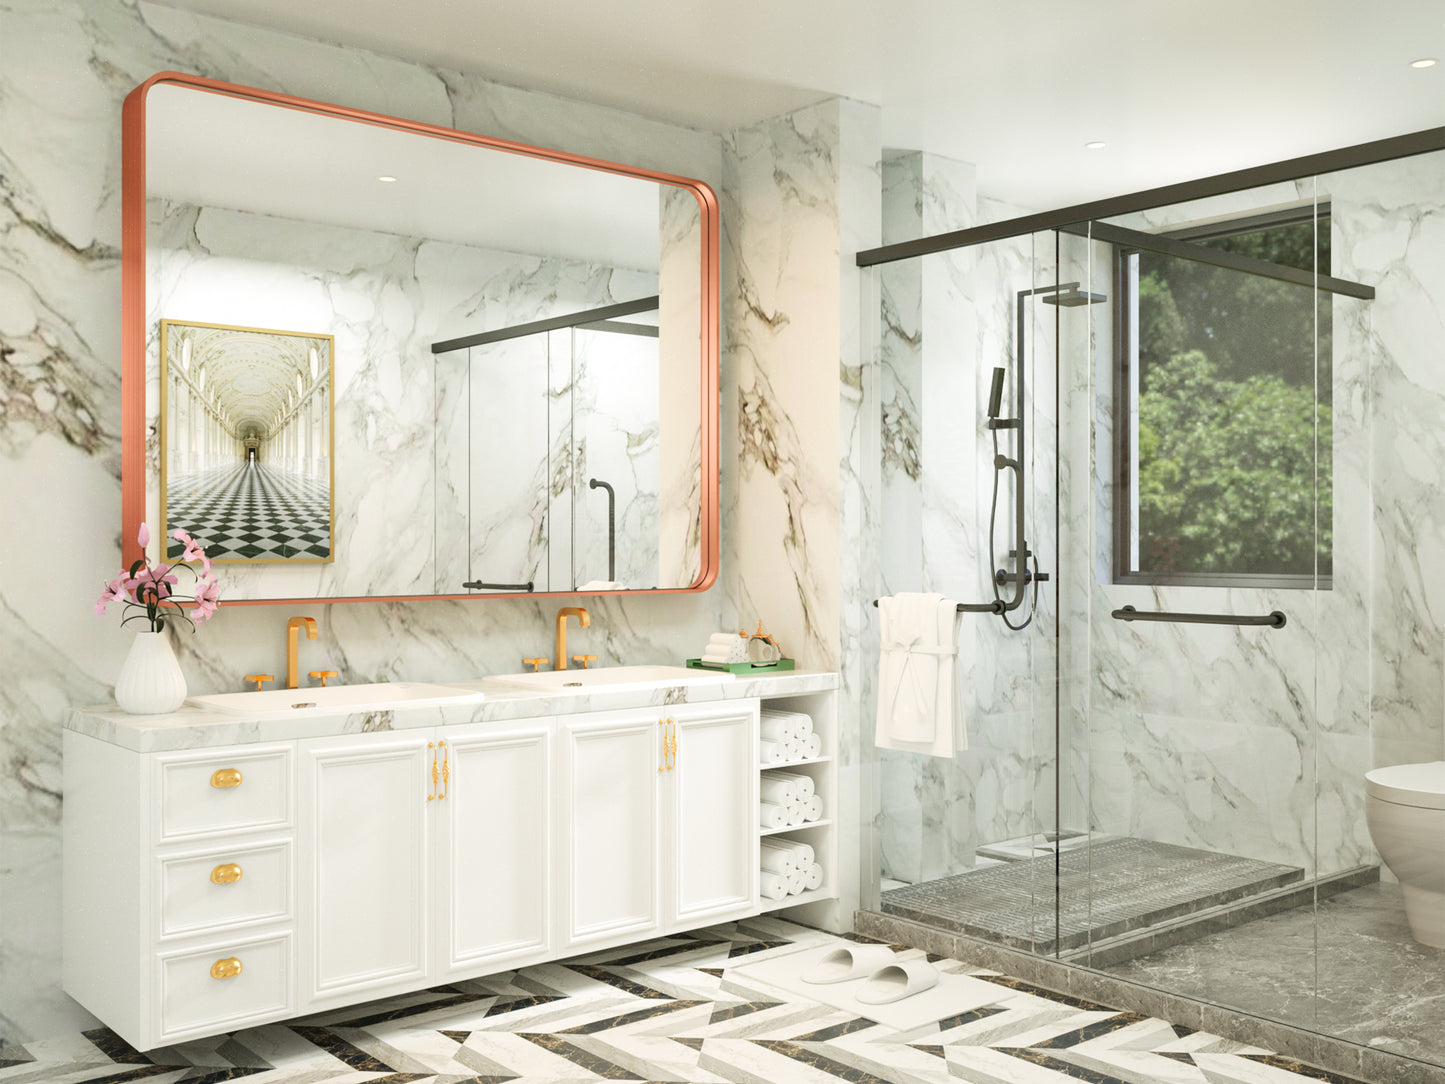 
                  
                    48" x 36" PILOCOS Classy Modern Rectangular Bathroom Vanity Mirror with Aluminum  Ribbed Texture Frame
                  
                